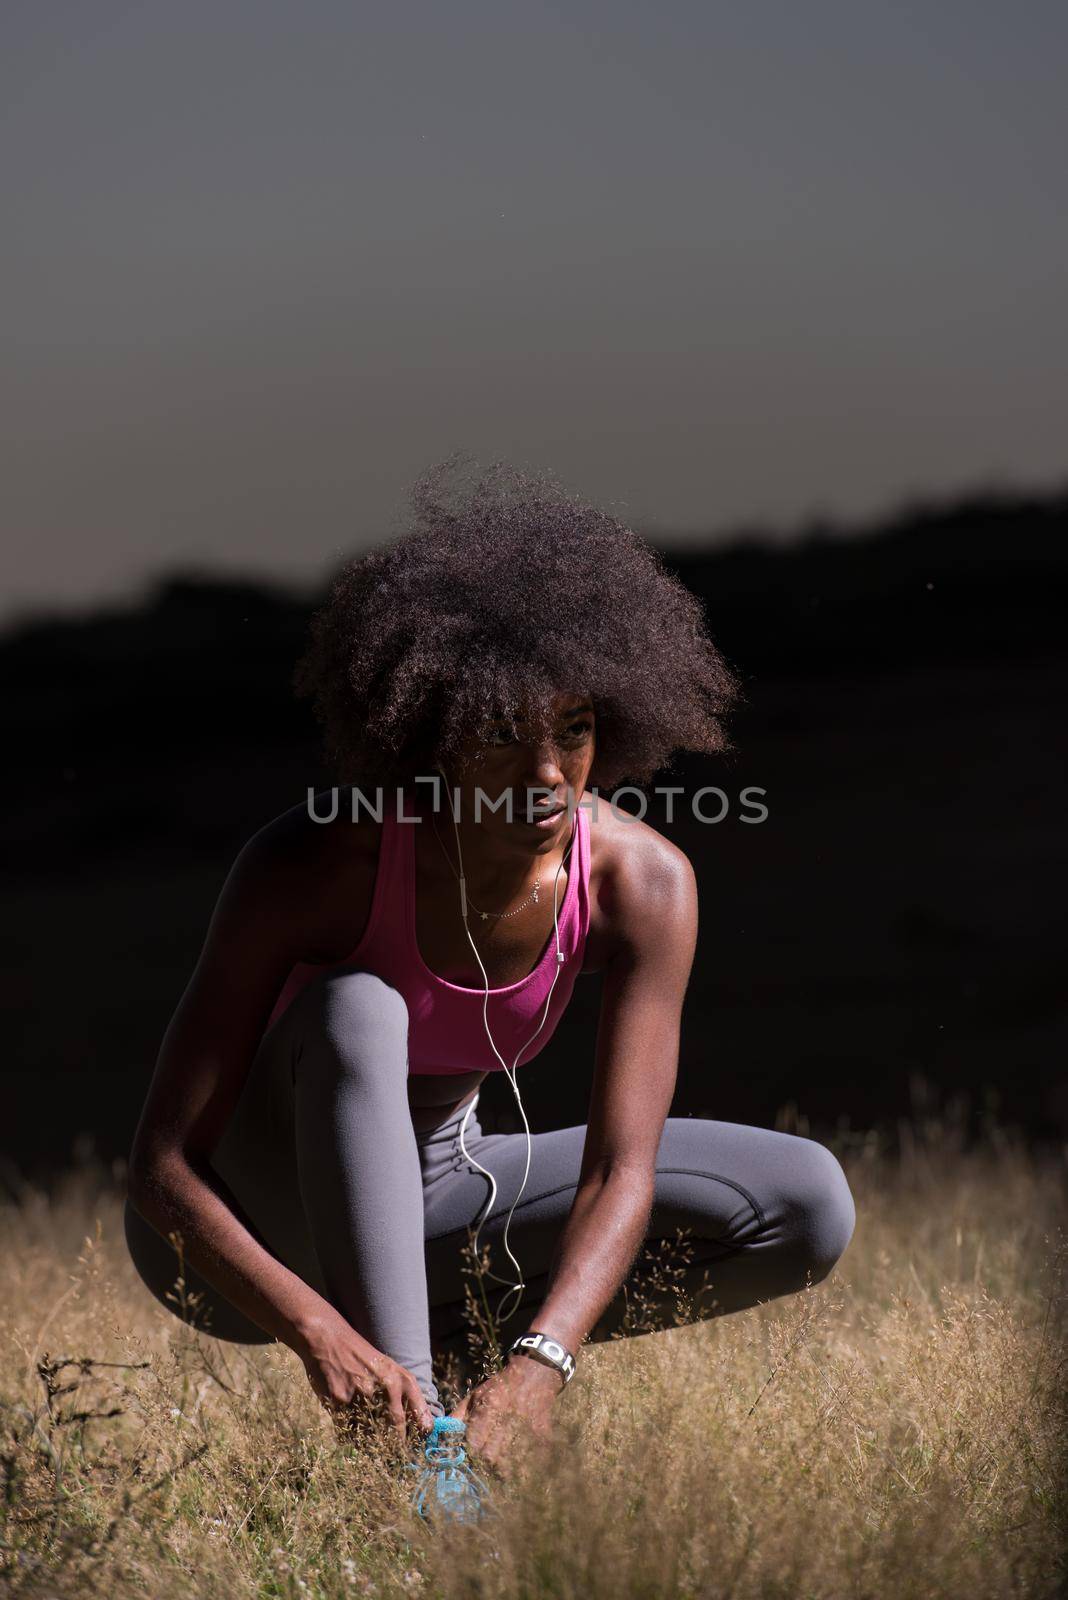 black woman runner tightening shoe lace by dotshock